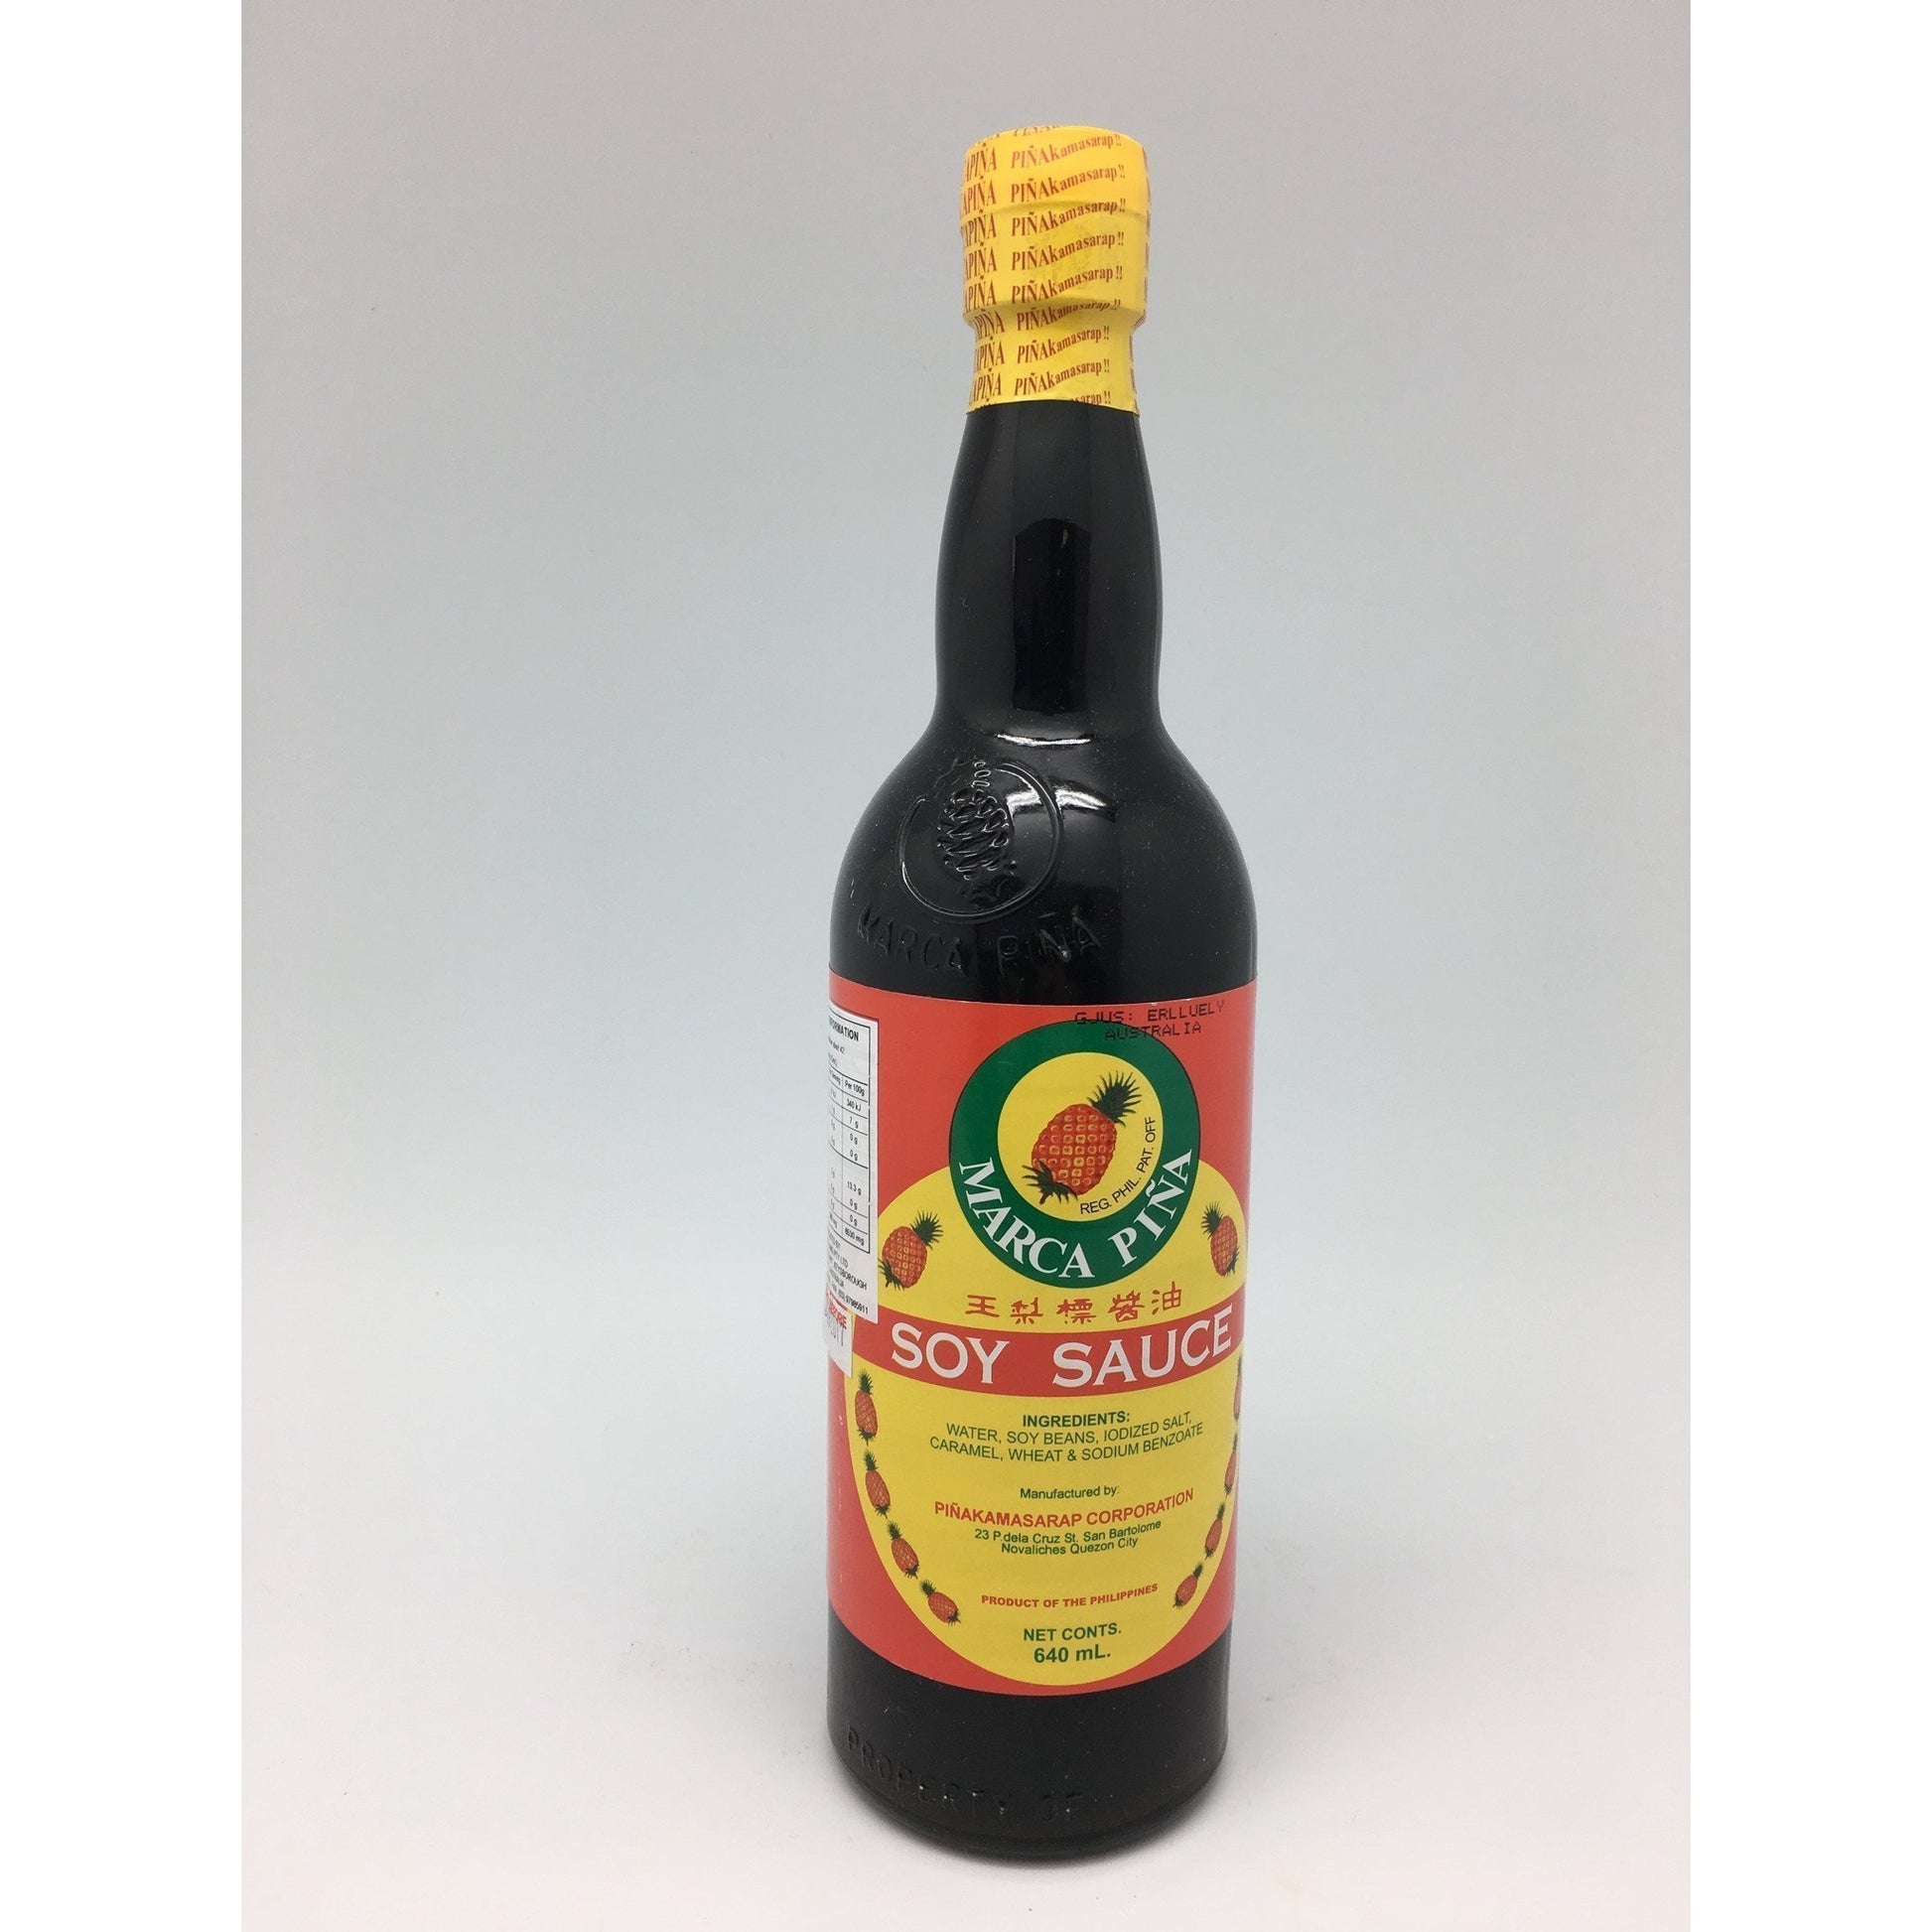 S066 Marca Pina Brand - Soy Sauce 640ml -  12 bot / 1ctn - New Eastland Pty Ltd - Asian food wholesalers